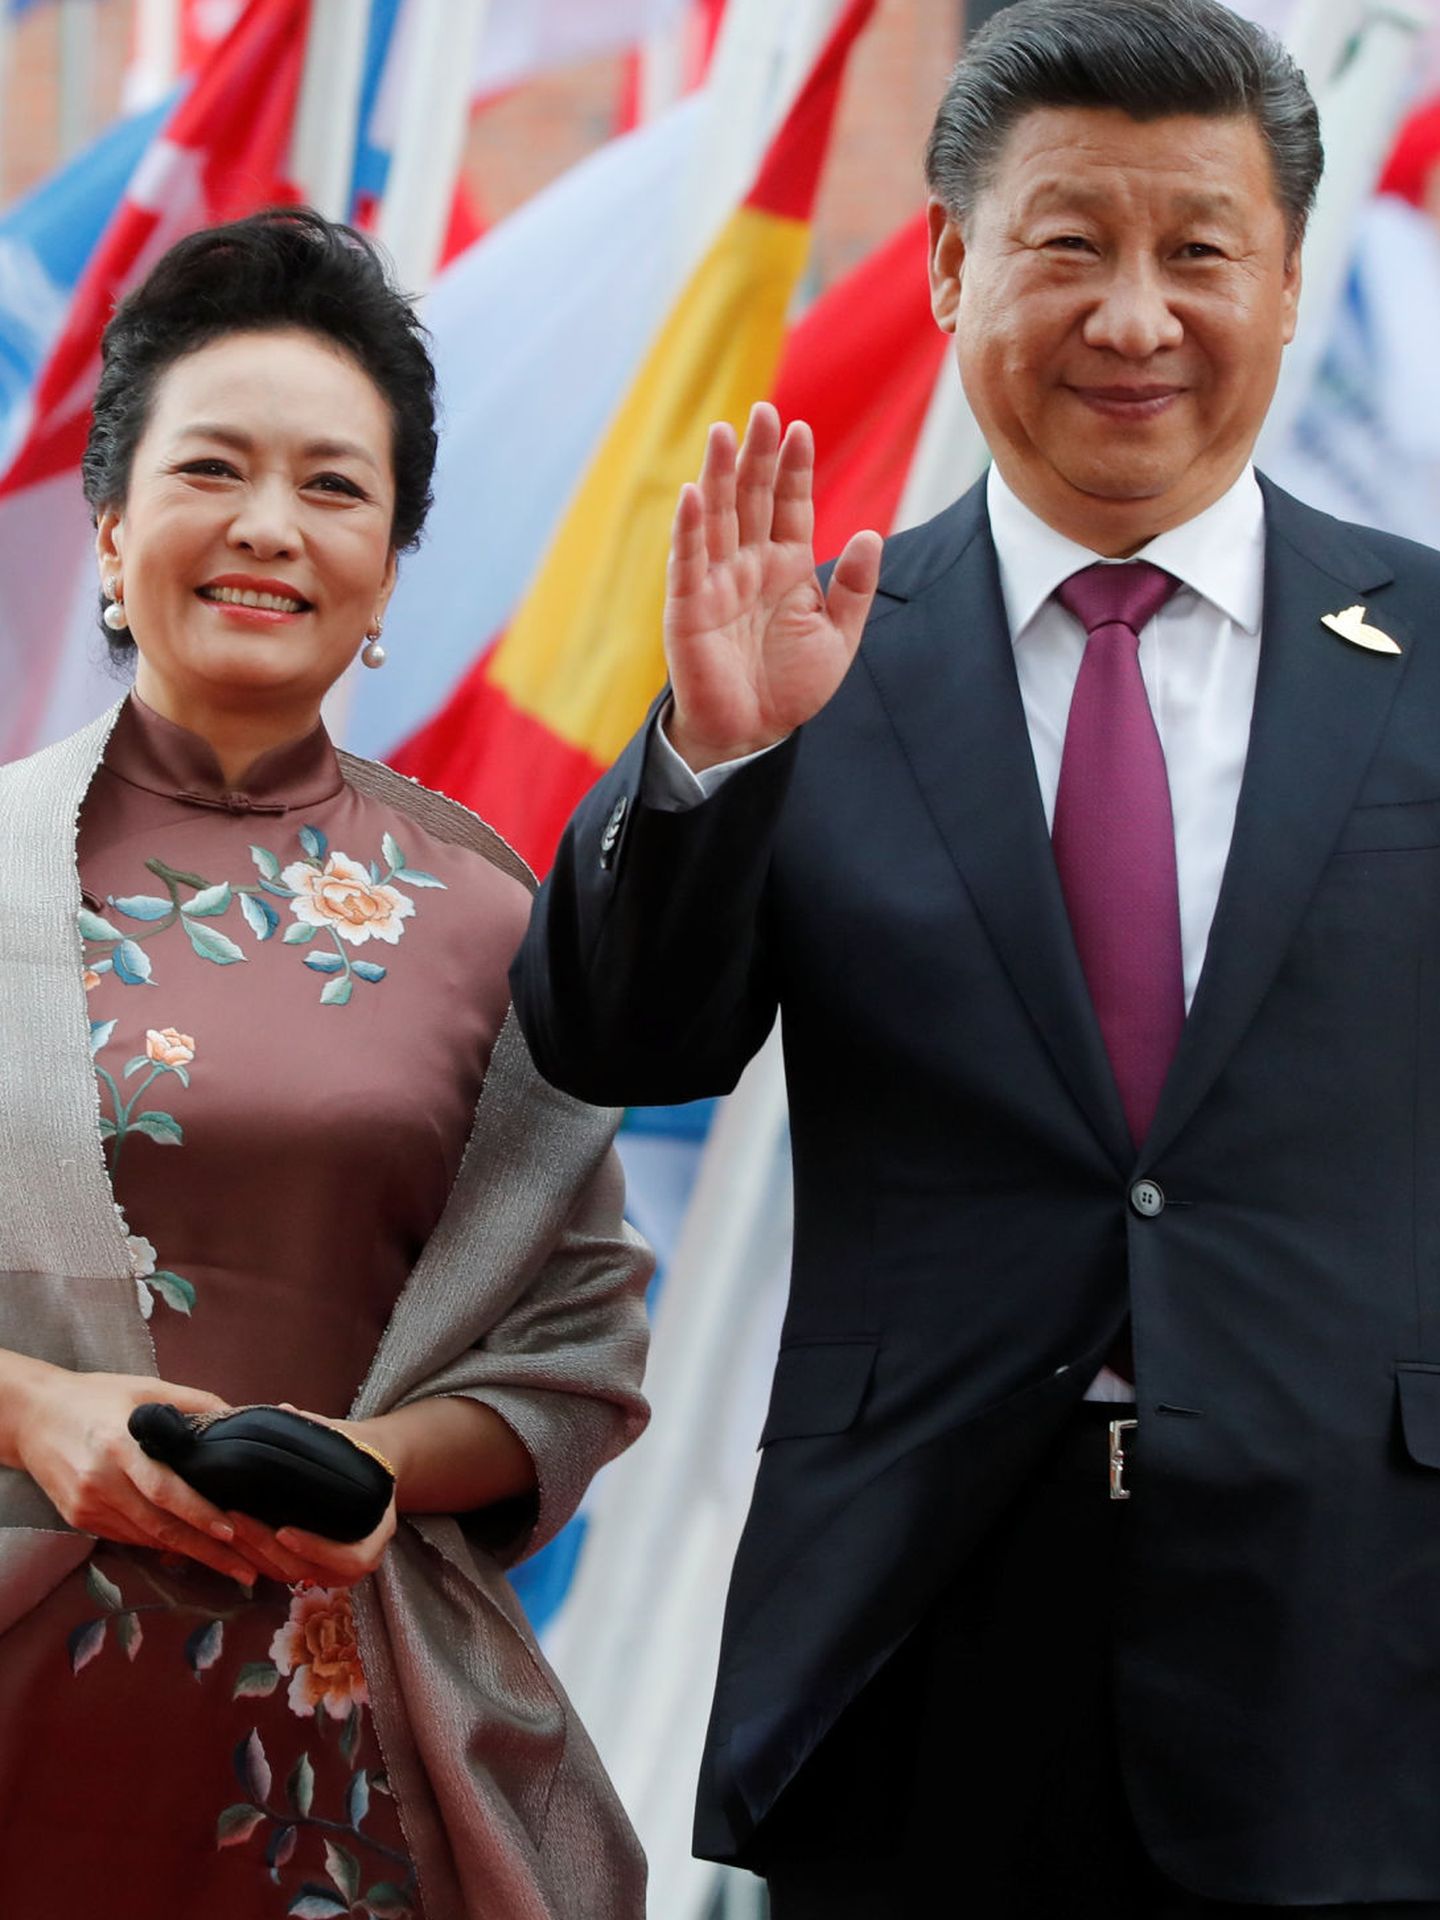 El matrimonio Jinping. (Reuters)